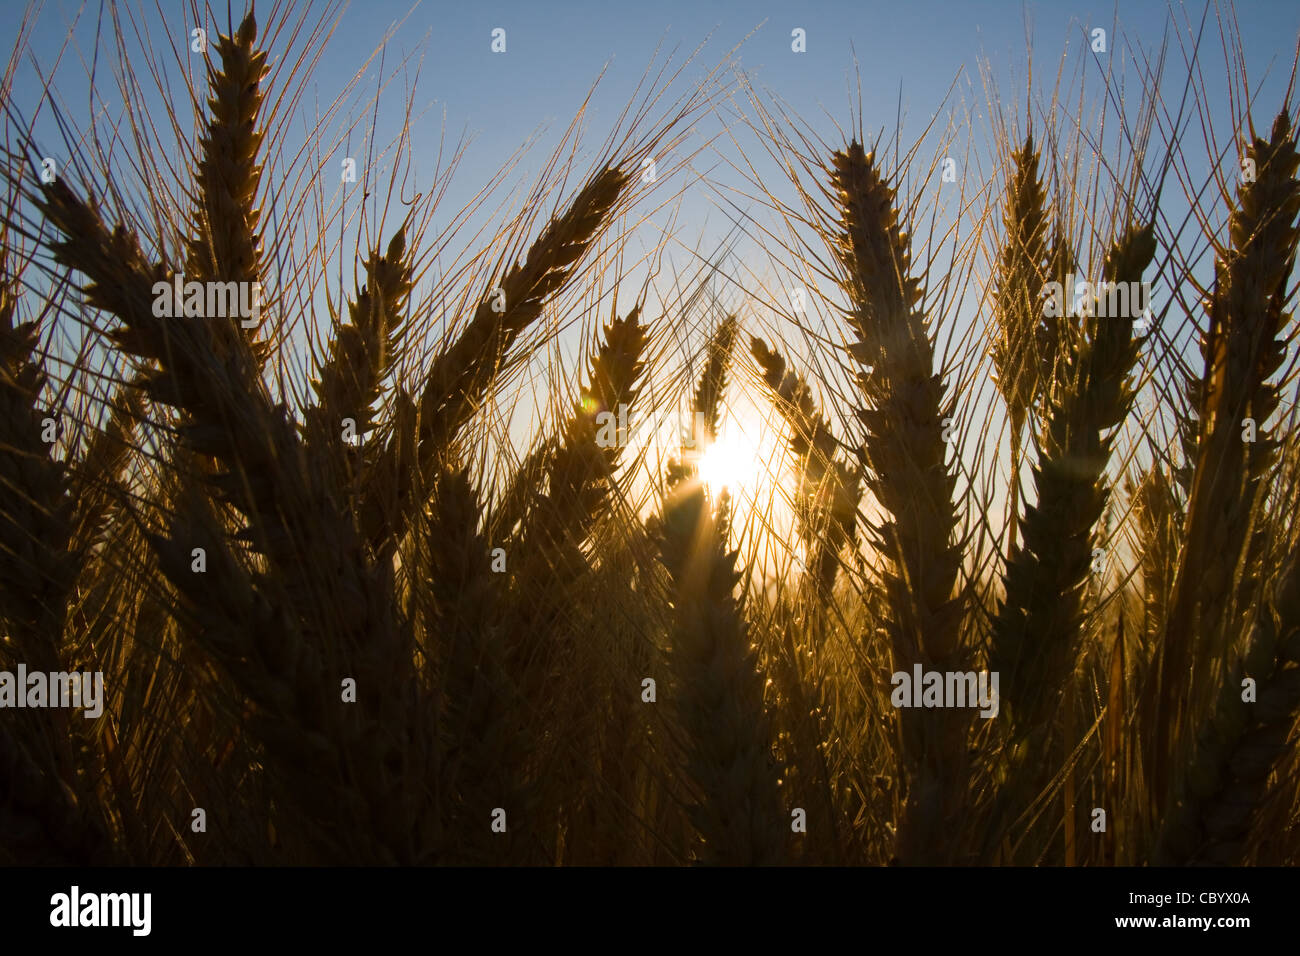 Wheat field at sunrise Stock Photo